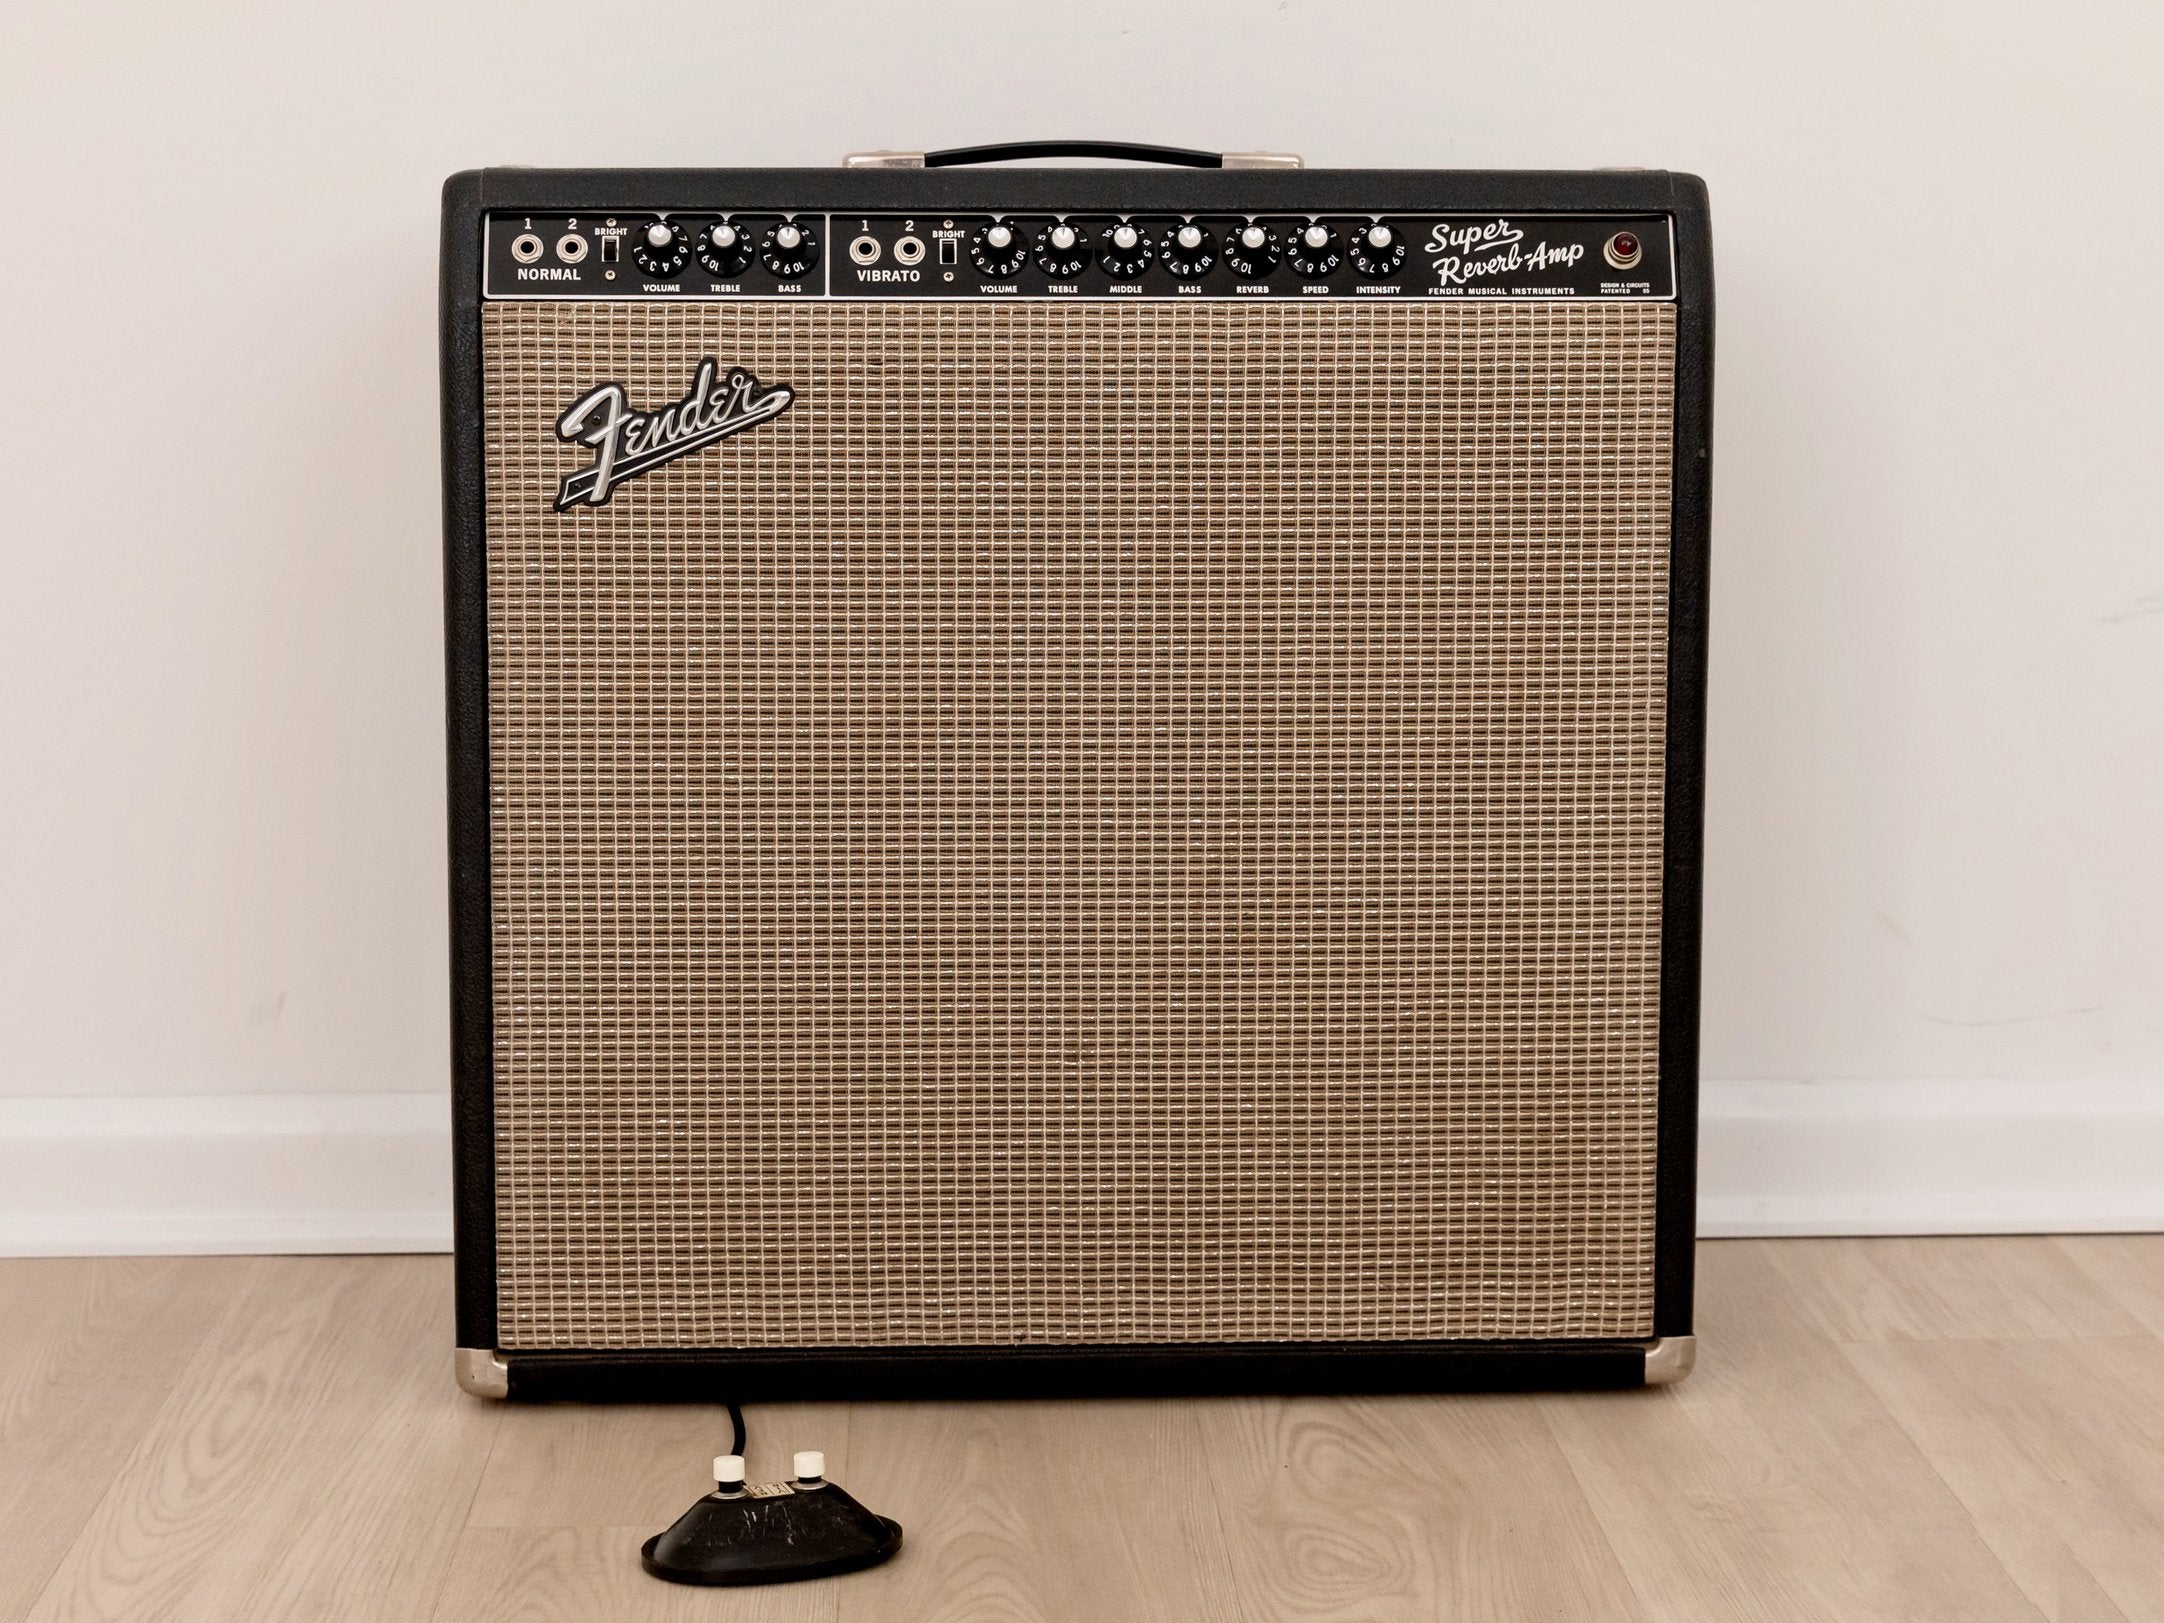 1965 Fender Super Reverb Black Panel Vintage Tube Amp AB763 w/ Ceramic Speakers, Cover & Ftsw